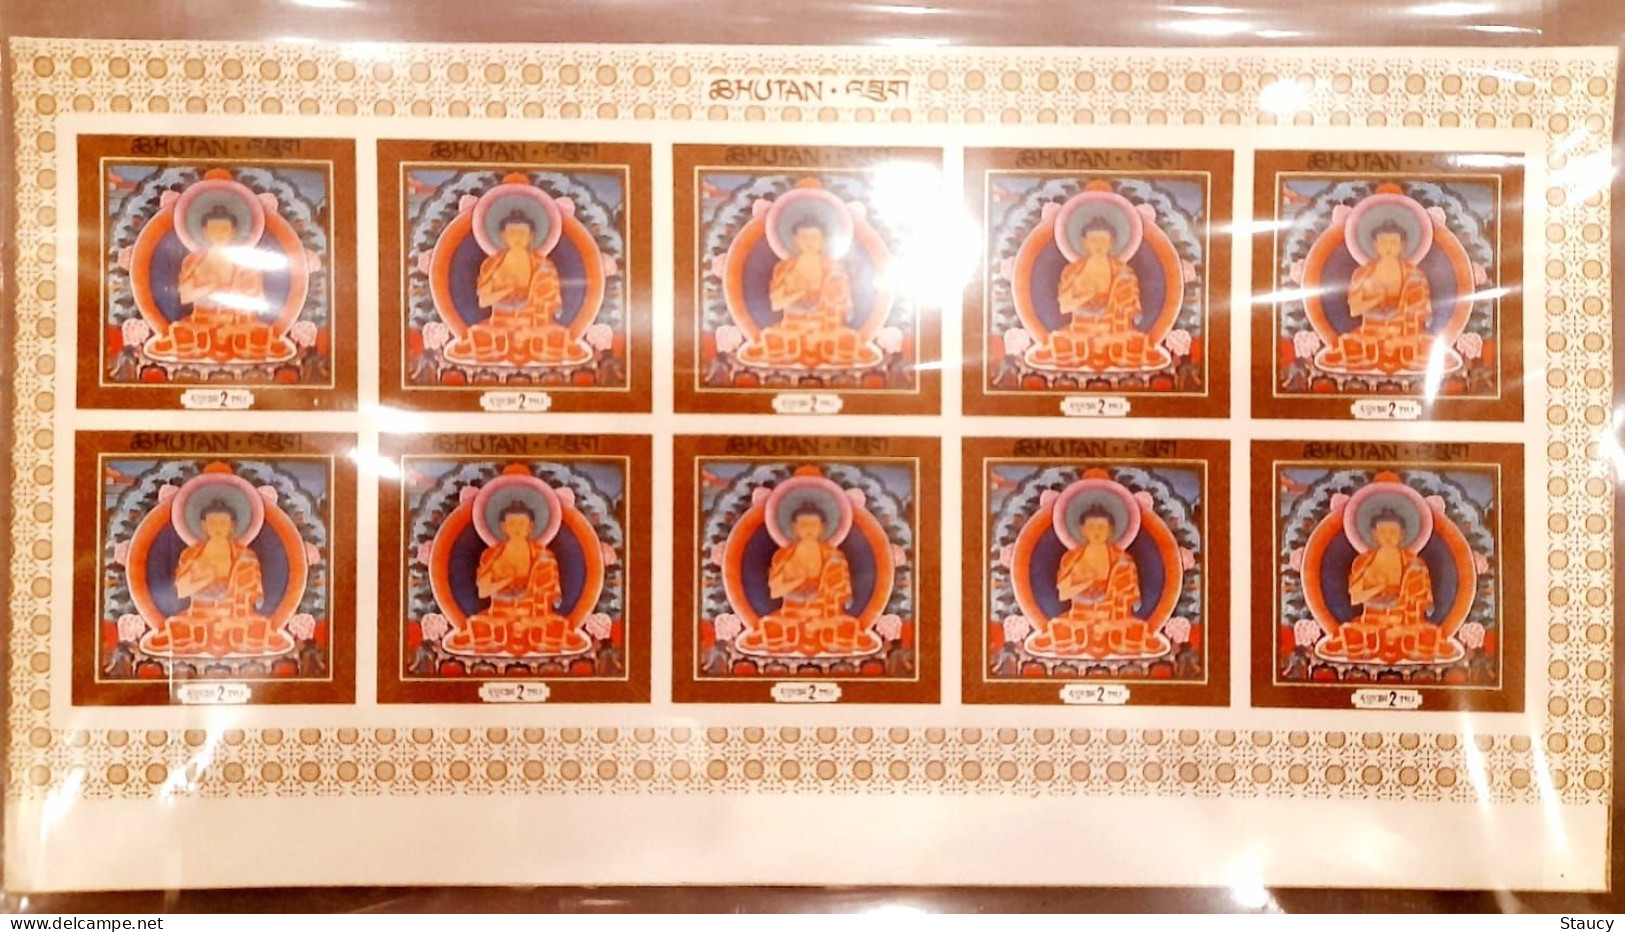 BHUTAN 1969 RELIGIOUS THANKA PAINTINGS BUDHA-SILK CLOTH Unique Stamp 5 Full Sheet SET + 2 Souvenir Sheet + 3 FDC's Scan - Buddhismus